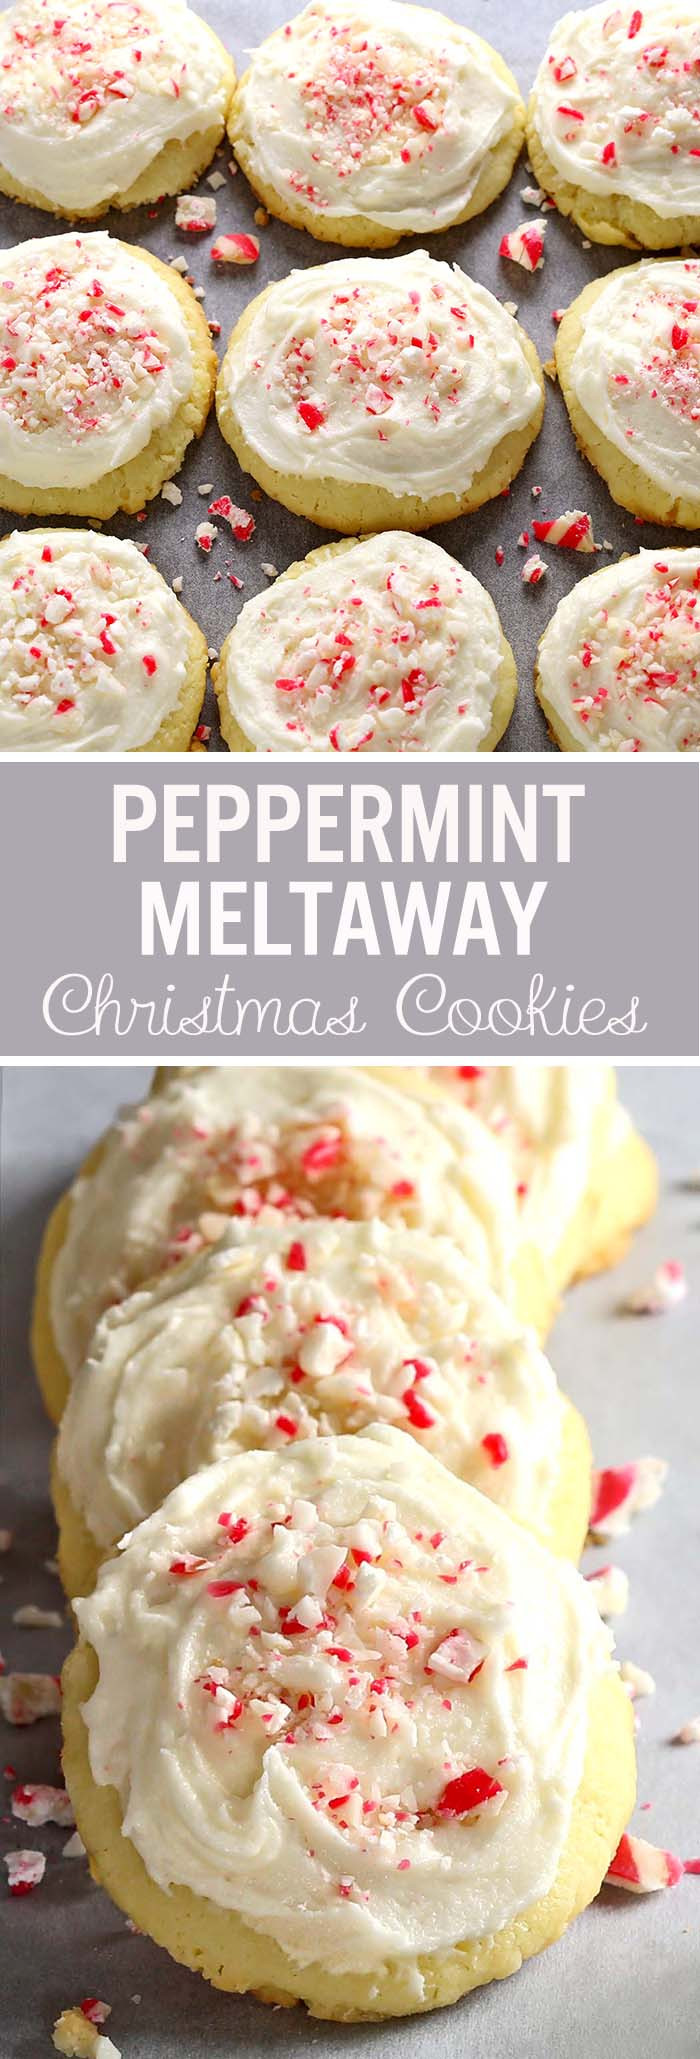 Christmas Meltaway Cookies
 Peppermint Meltaway Cookies Cakescottage